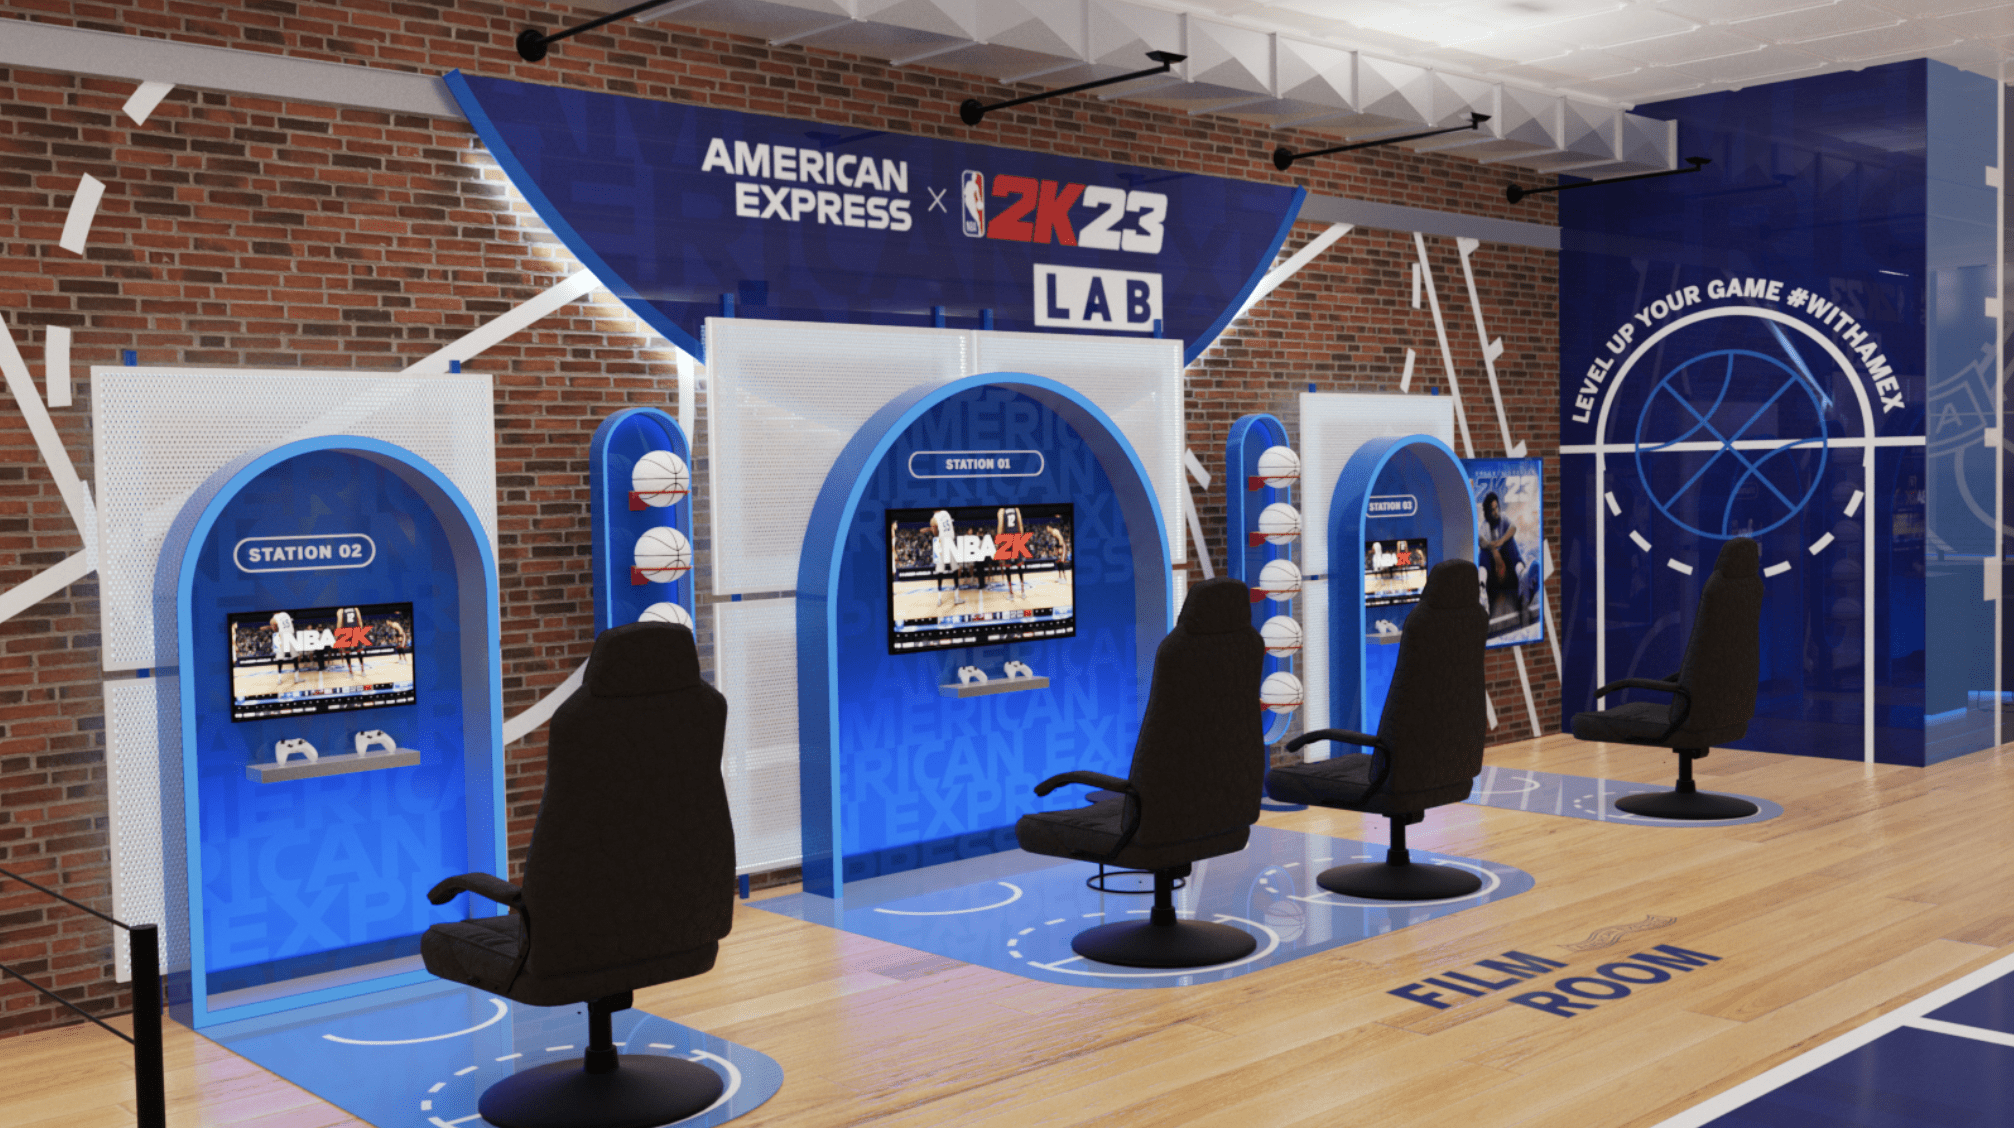 American Express x NBA 2K23 Lab